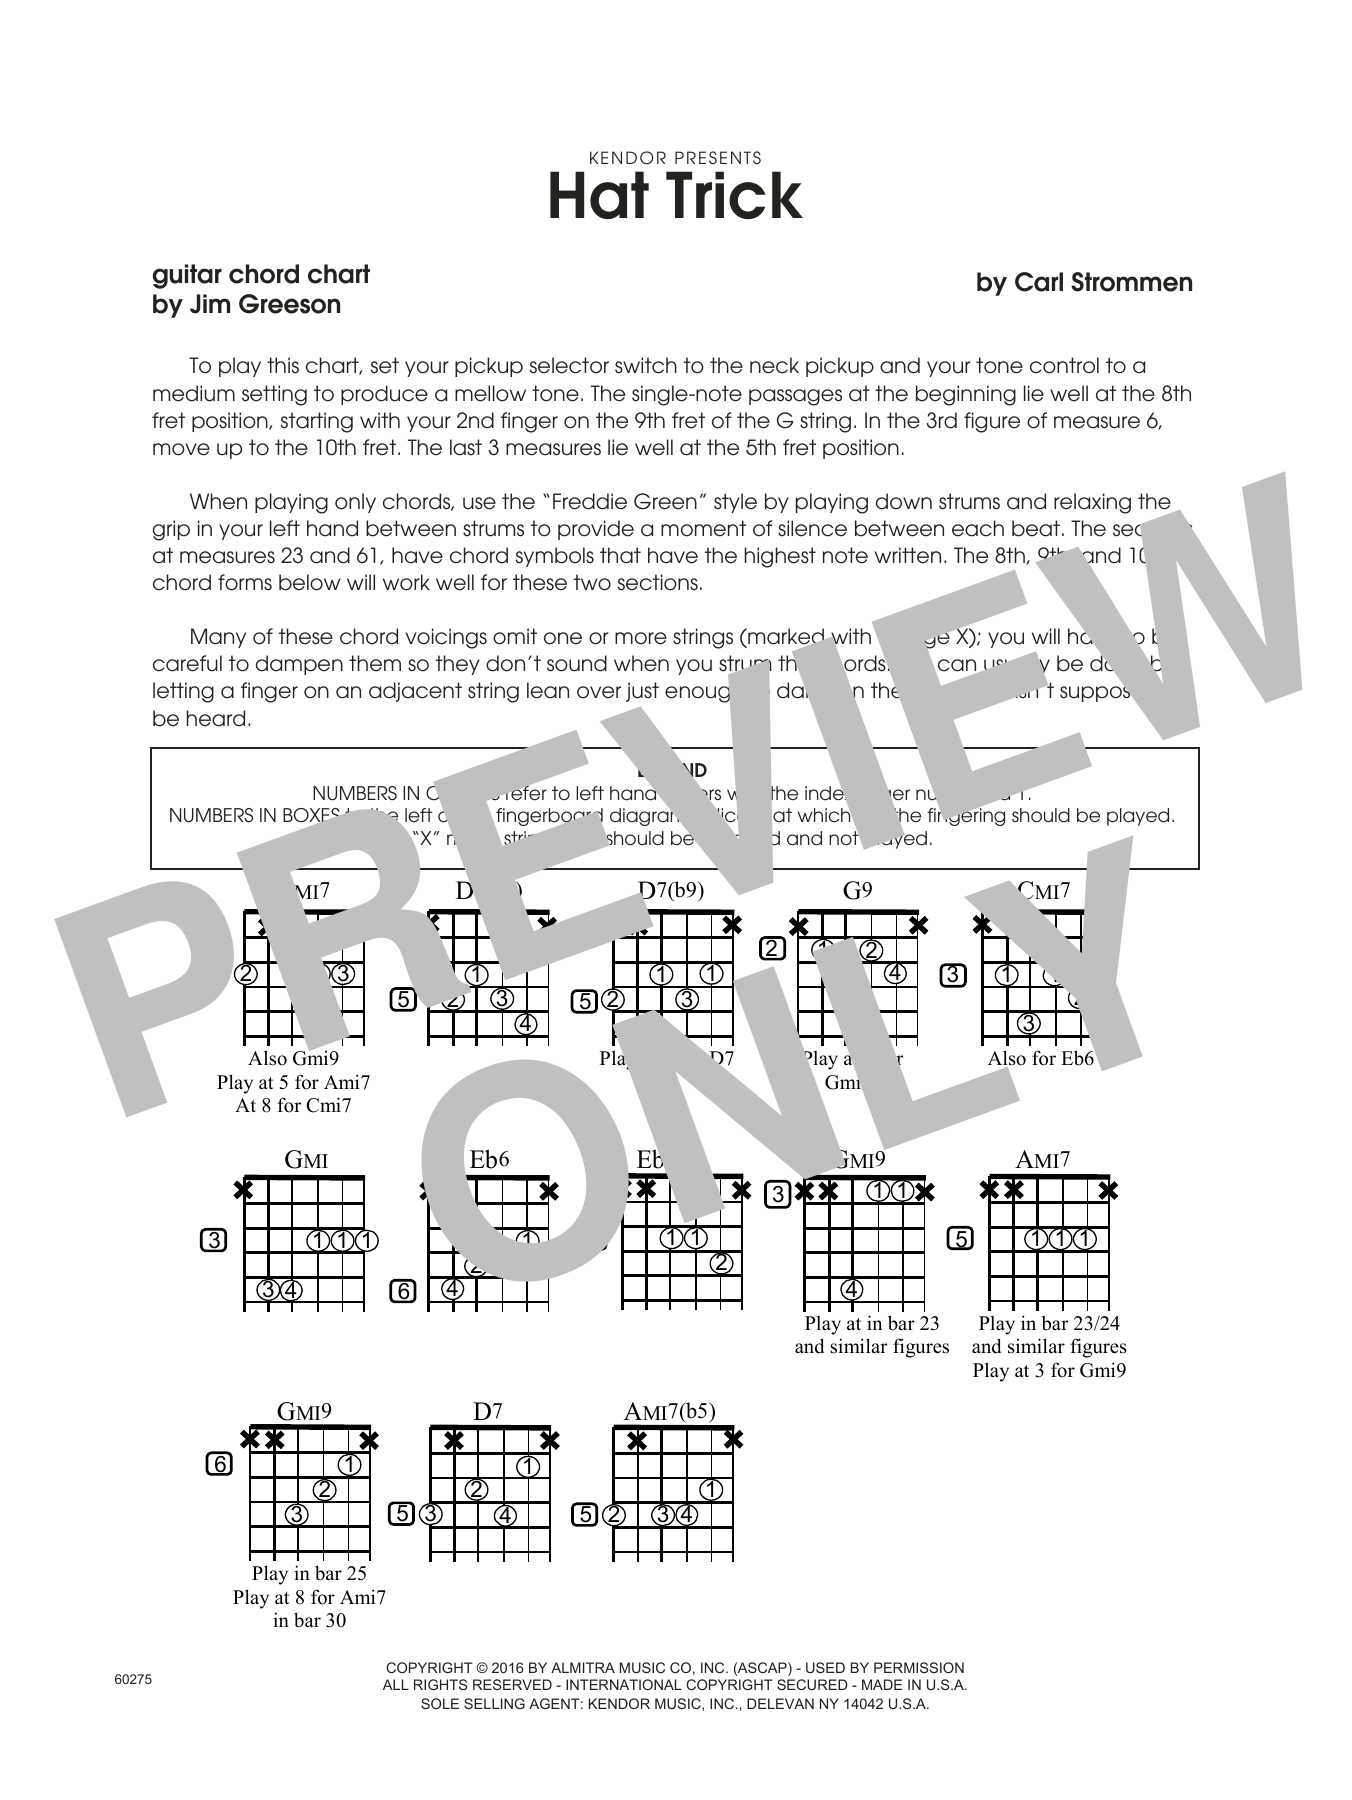 Download Carl Strommen Hat Trick - Guitar Chord Chart Sheet Music